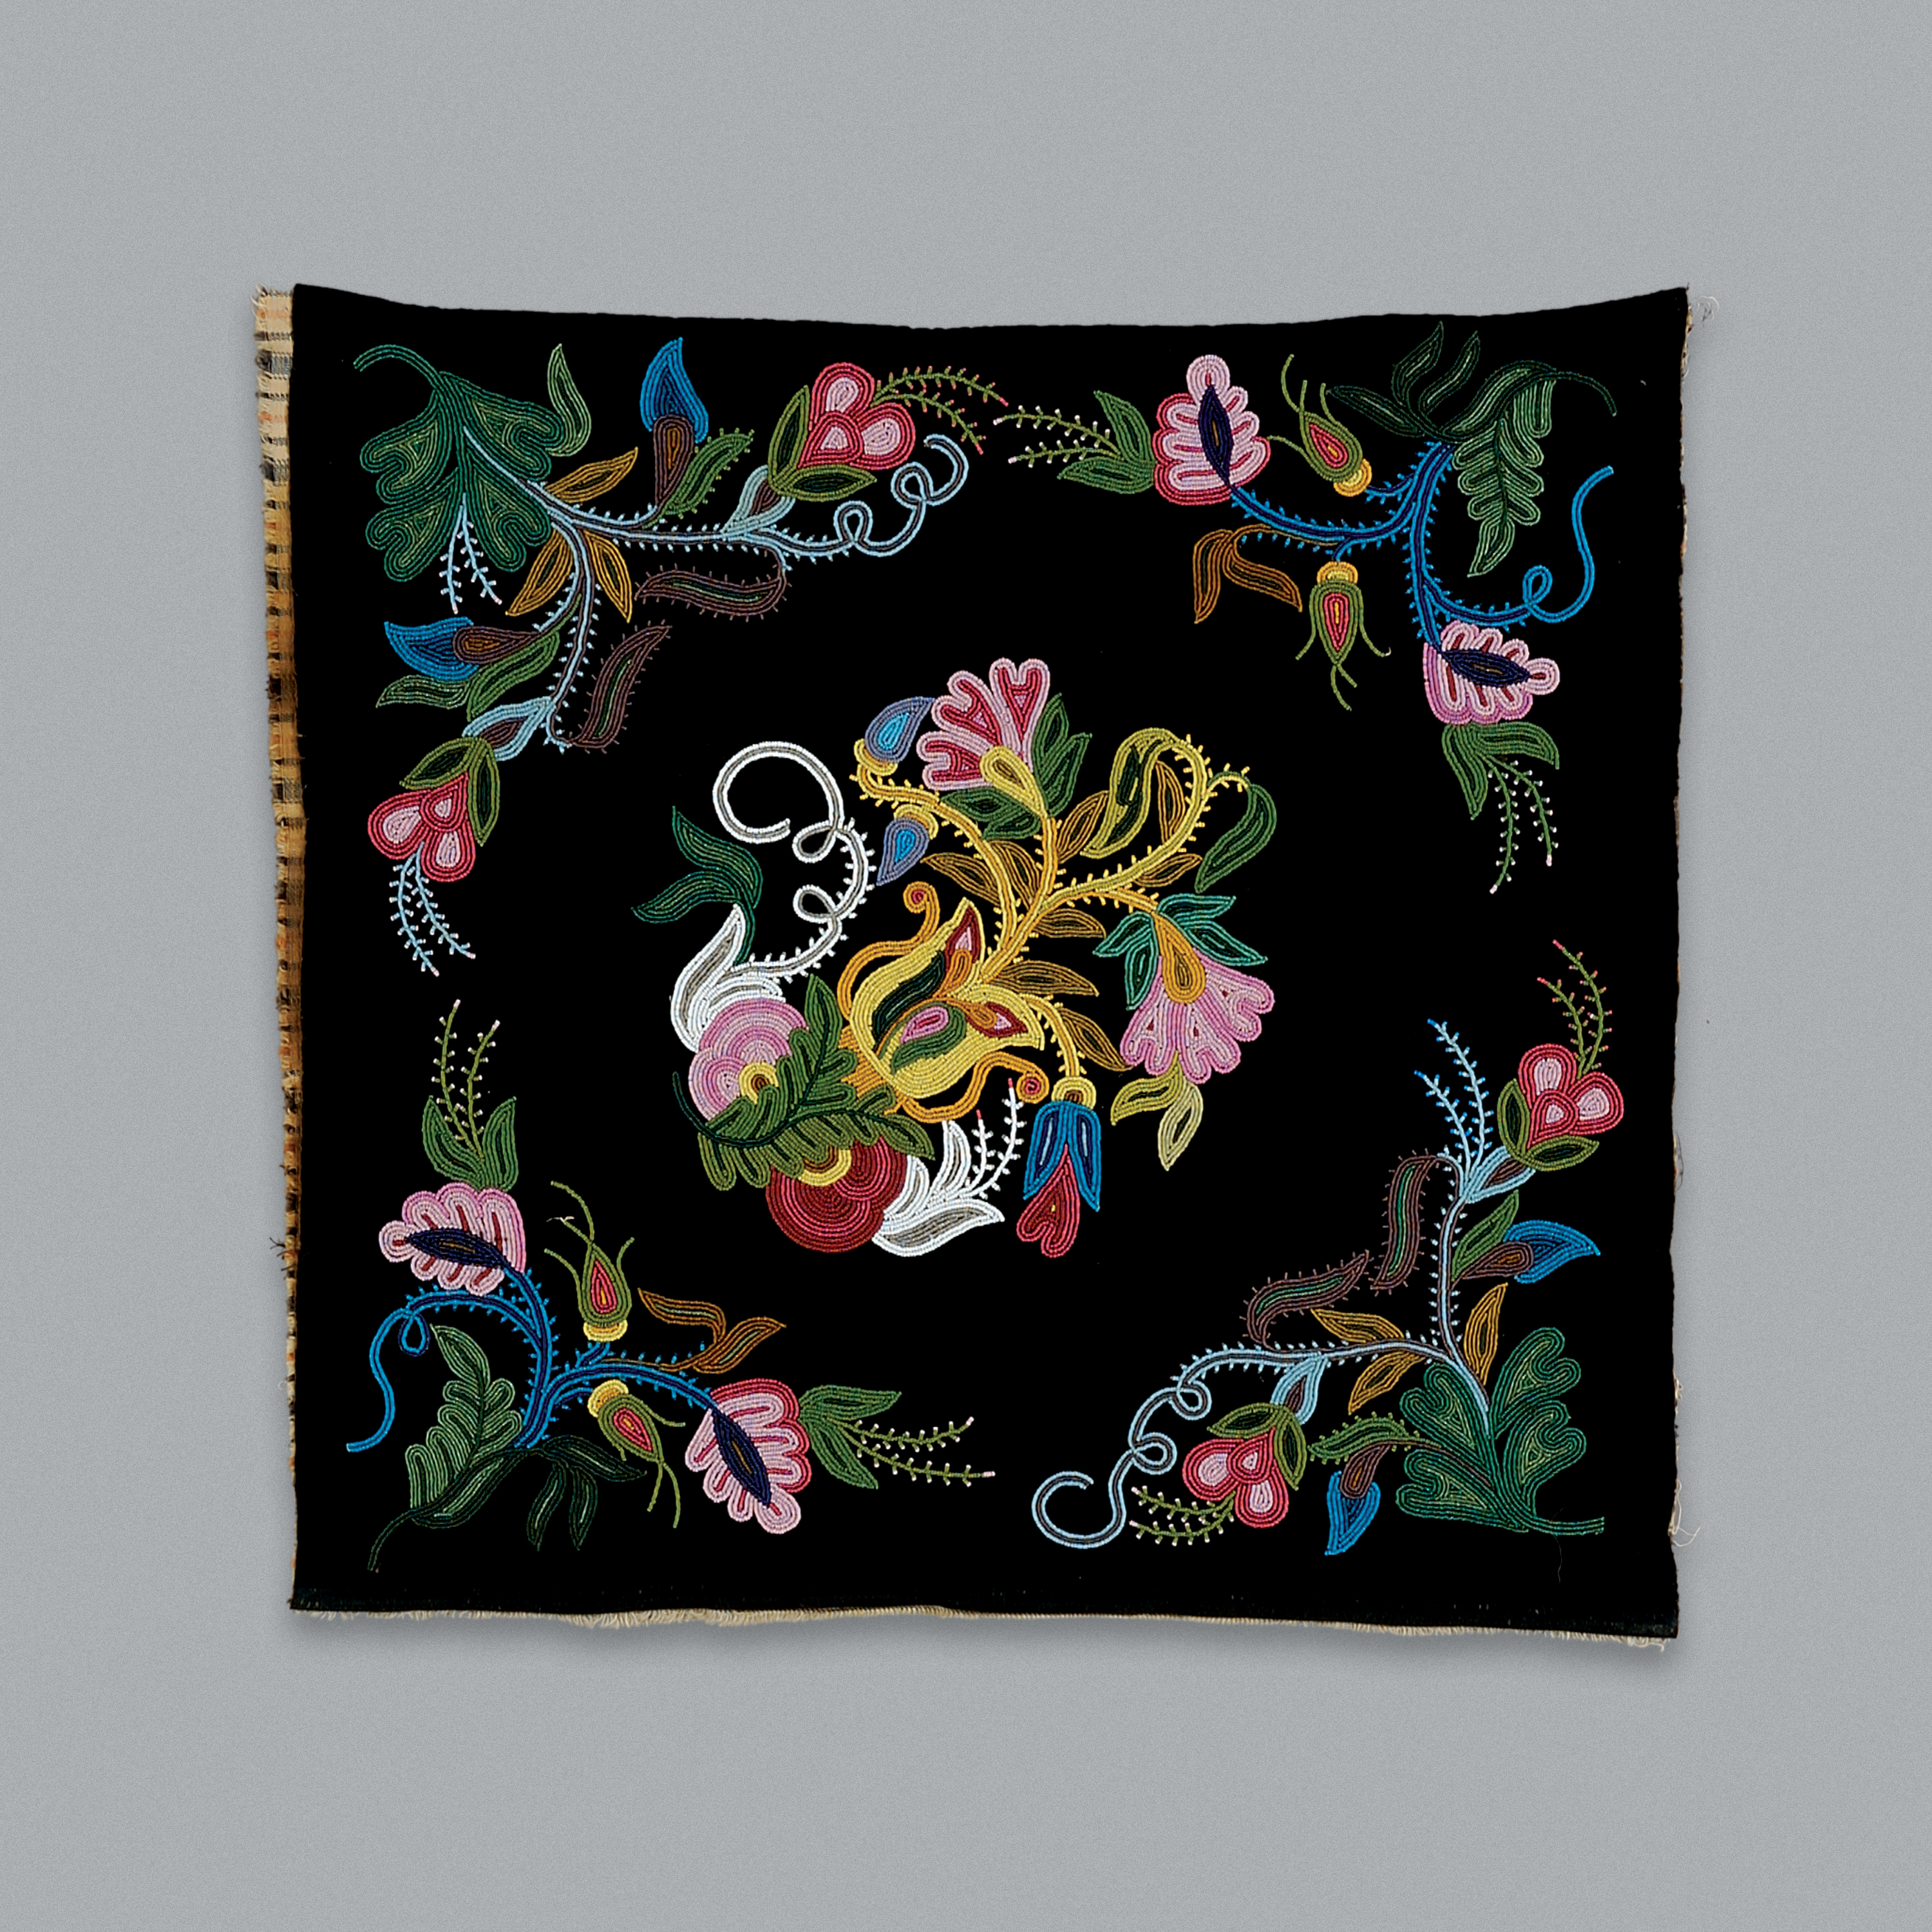 Motifs de fleurs perlés sur un tissu noir.//Flower designs beaded onto a black backing